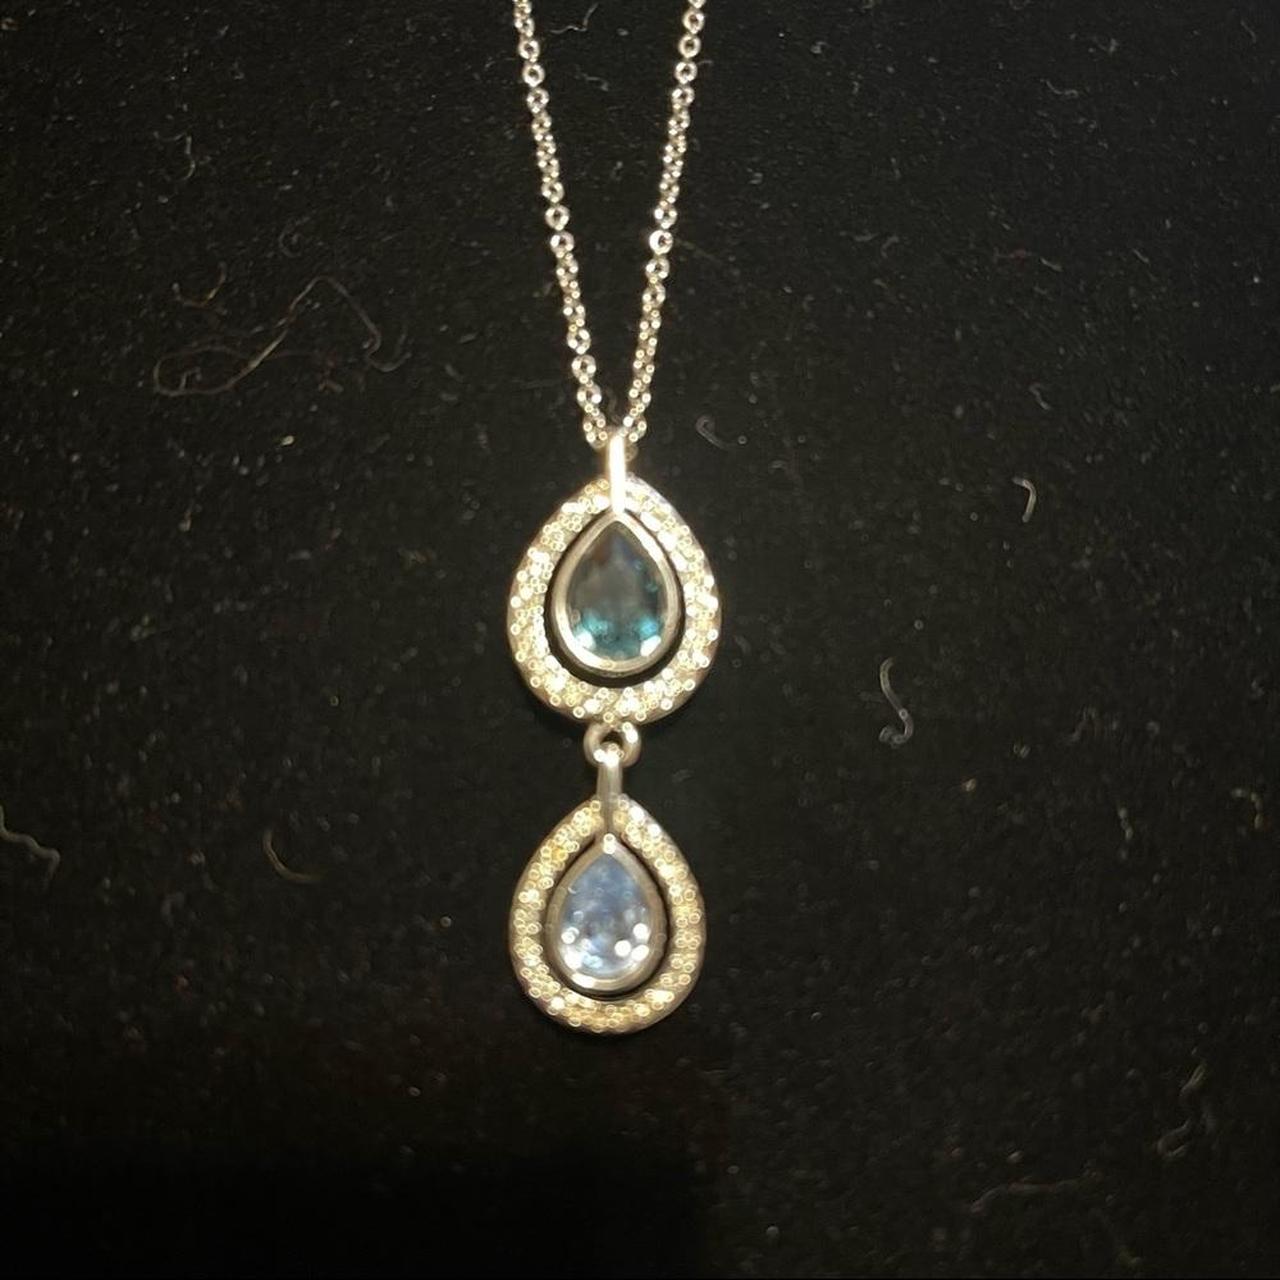 Product Image 4 - Stunning Swarovski Crystal Necklace. 2